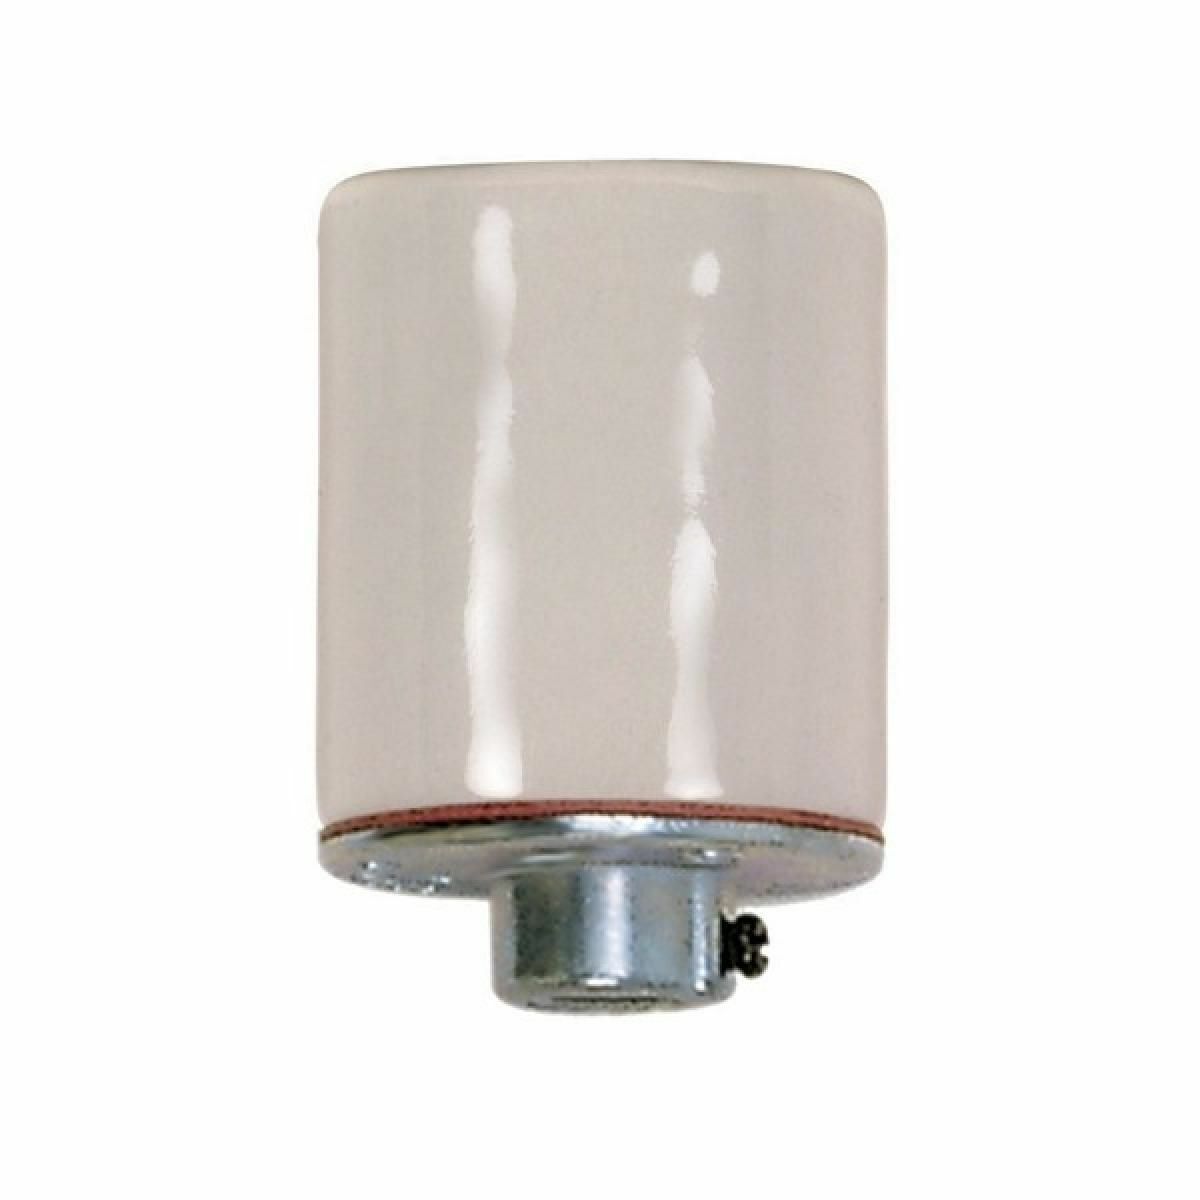  Porcelain keyless lamp socket w/ 1/4 IPS hole   TR-76